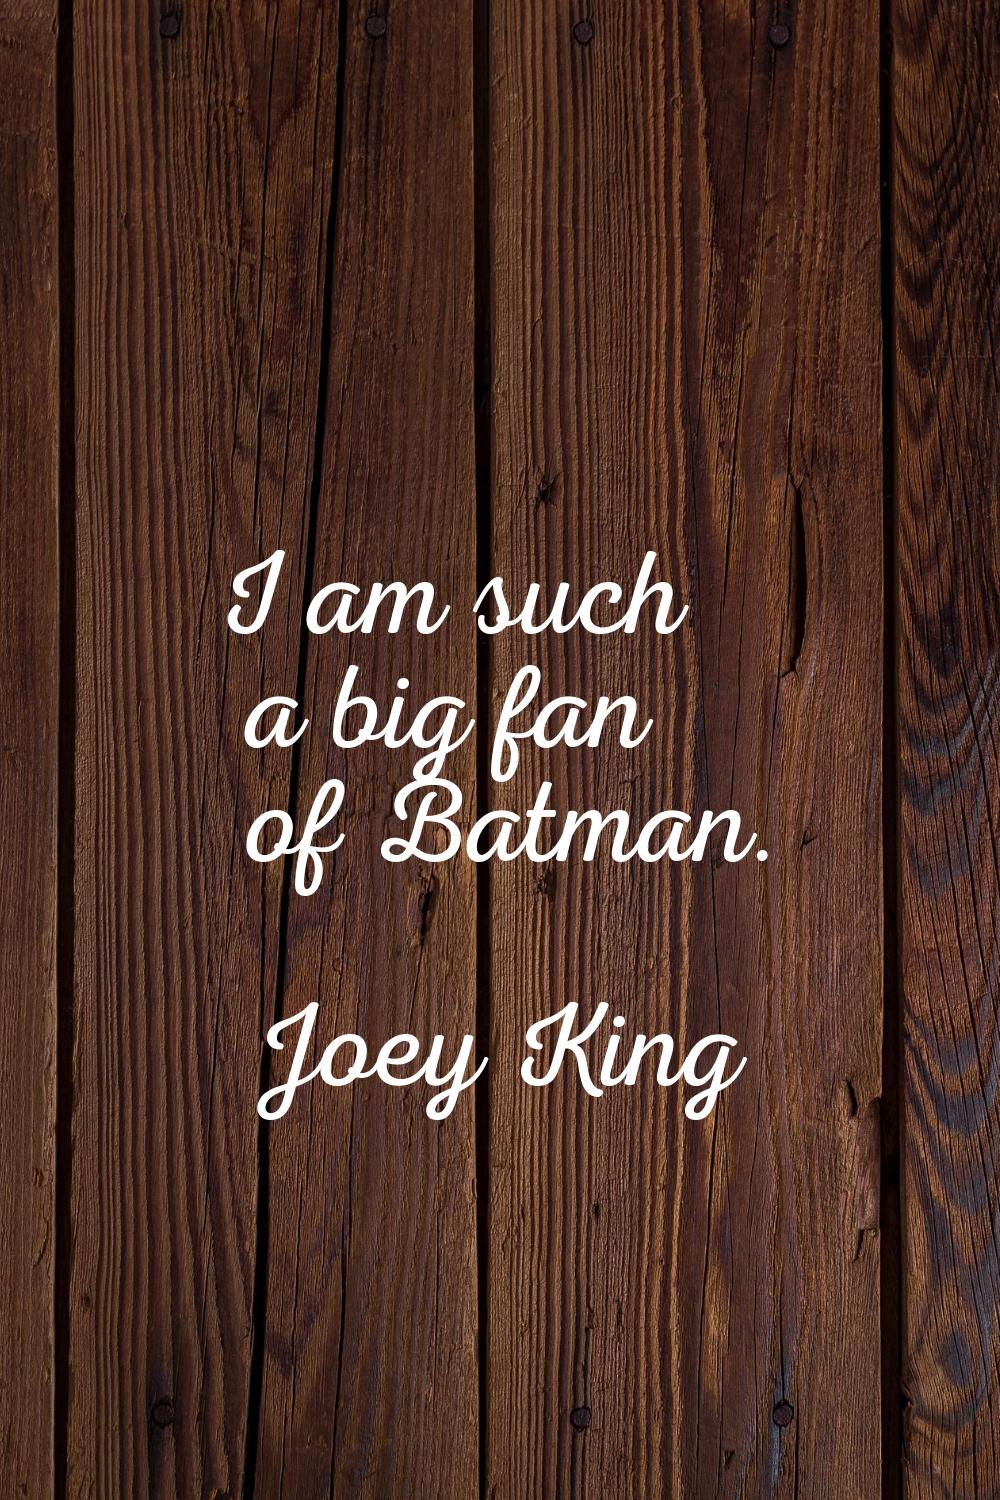 I am such a big fan of Batman.